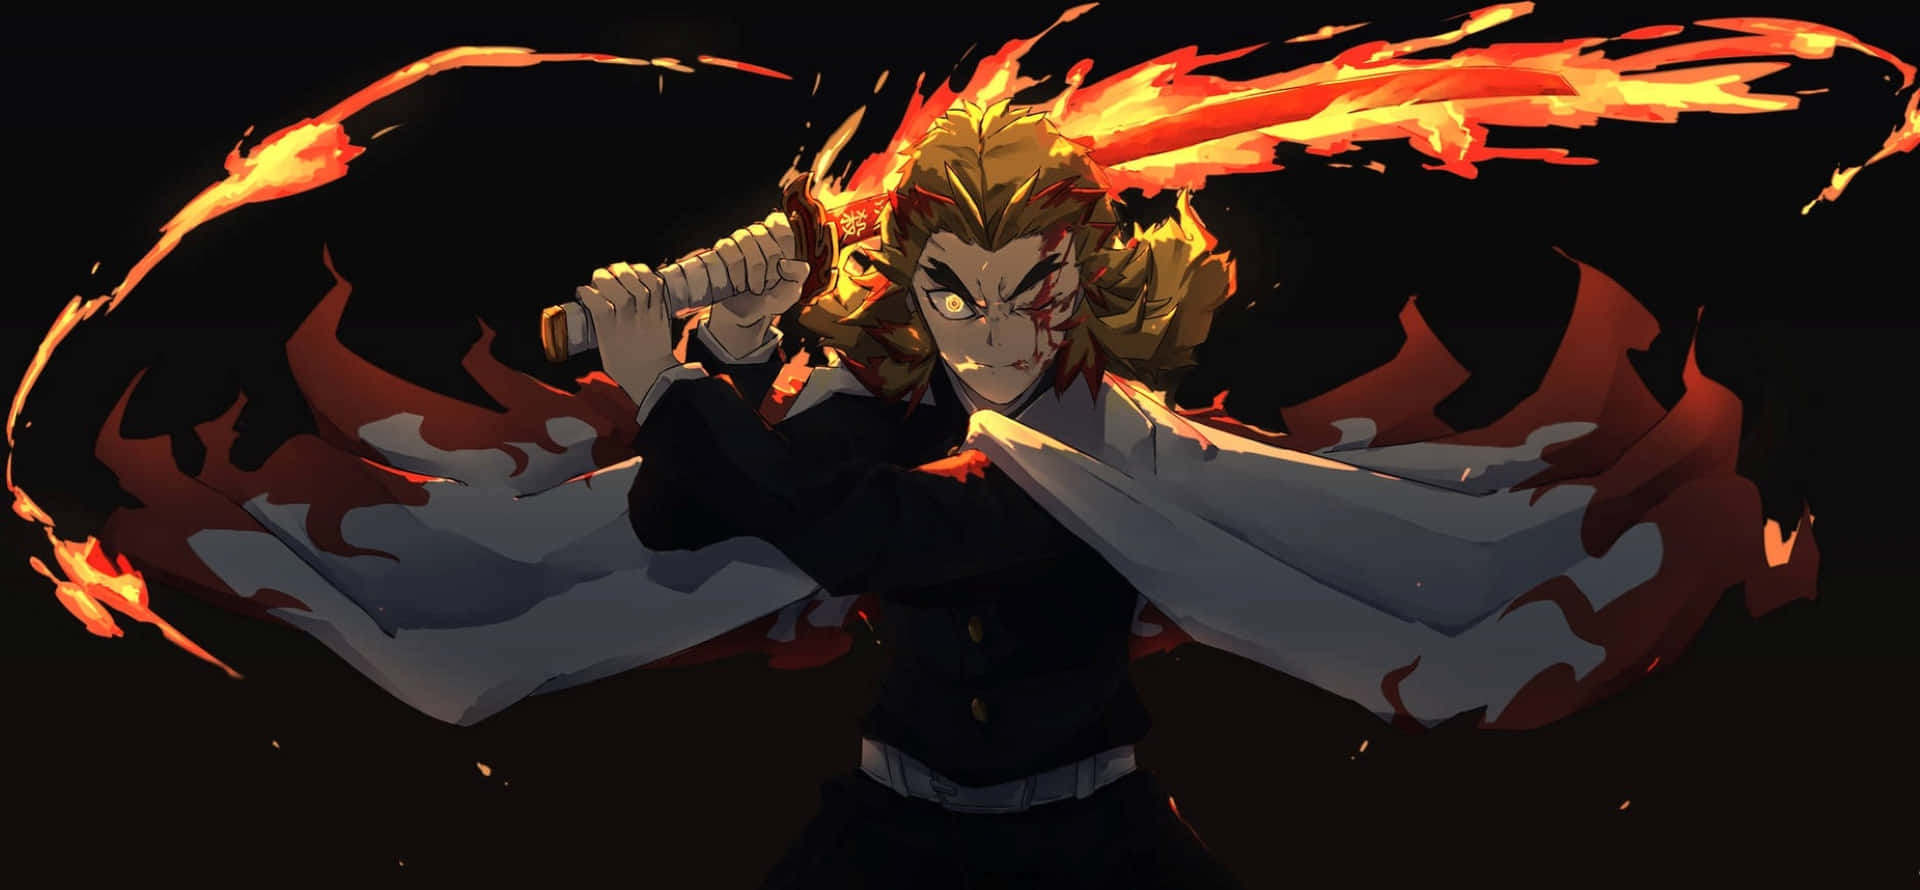 Rengoku wielding his fiery sword Wallpaper